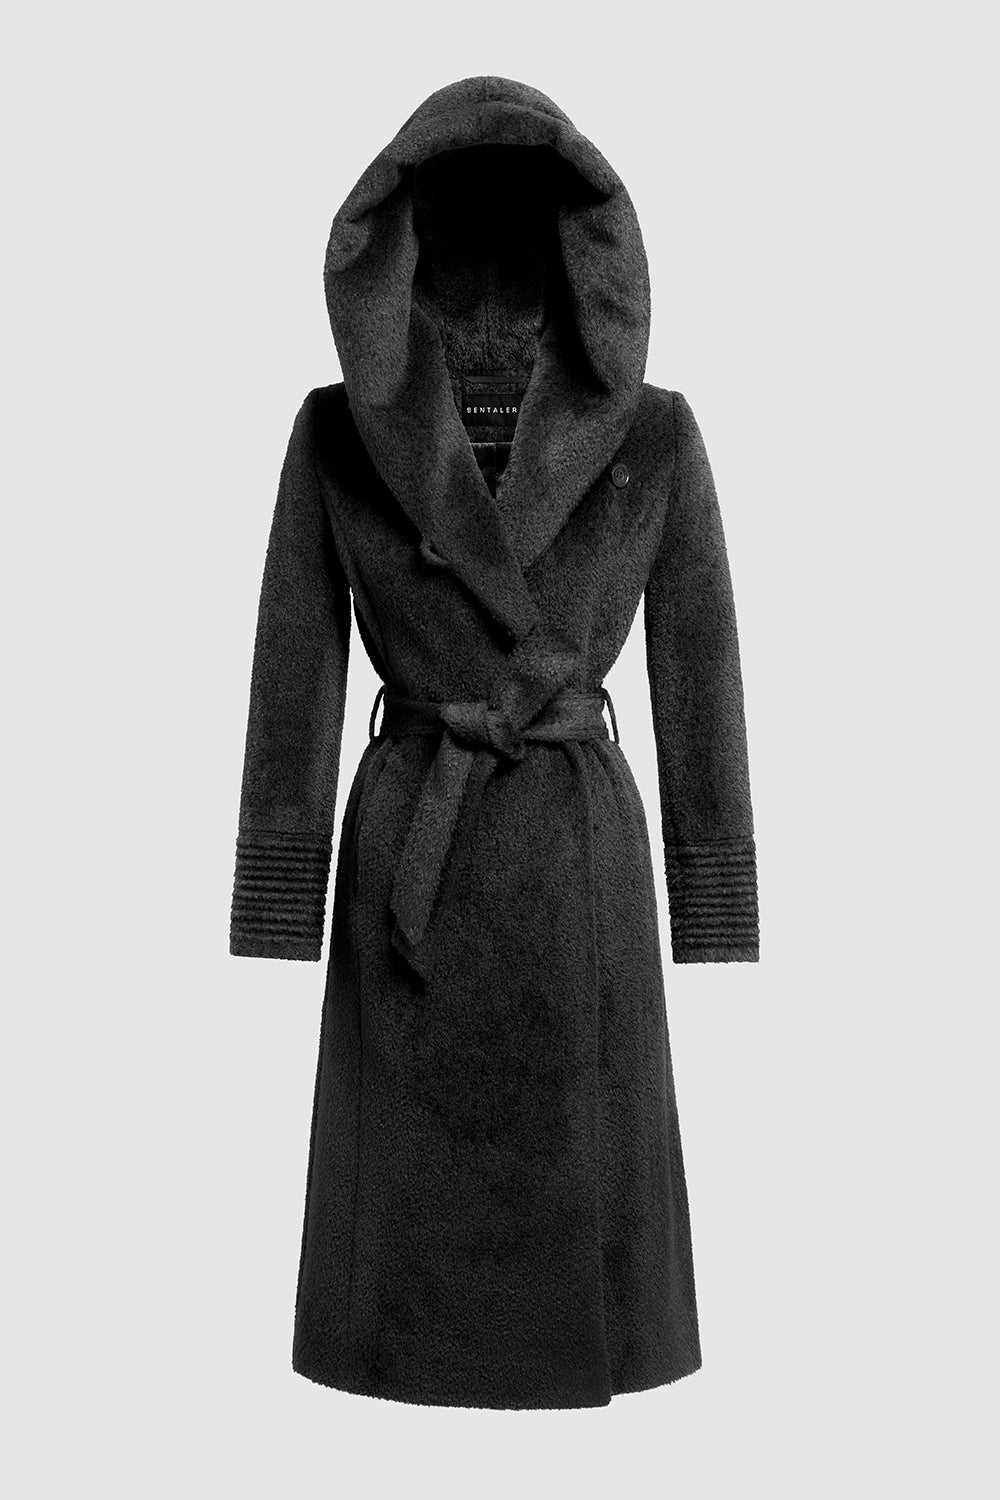 Caramel complex(ion) 🤎 Bag @louisvuitton • Coat by @sentaler ✨  #LouisVuitton #LV #Sentaler